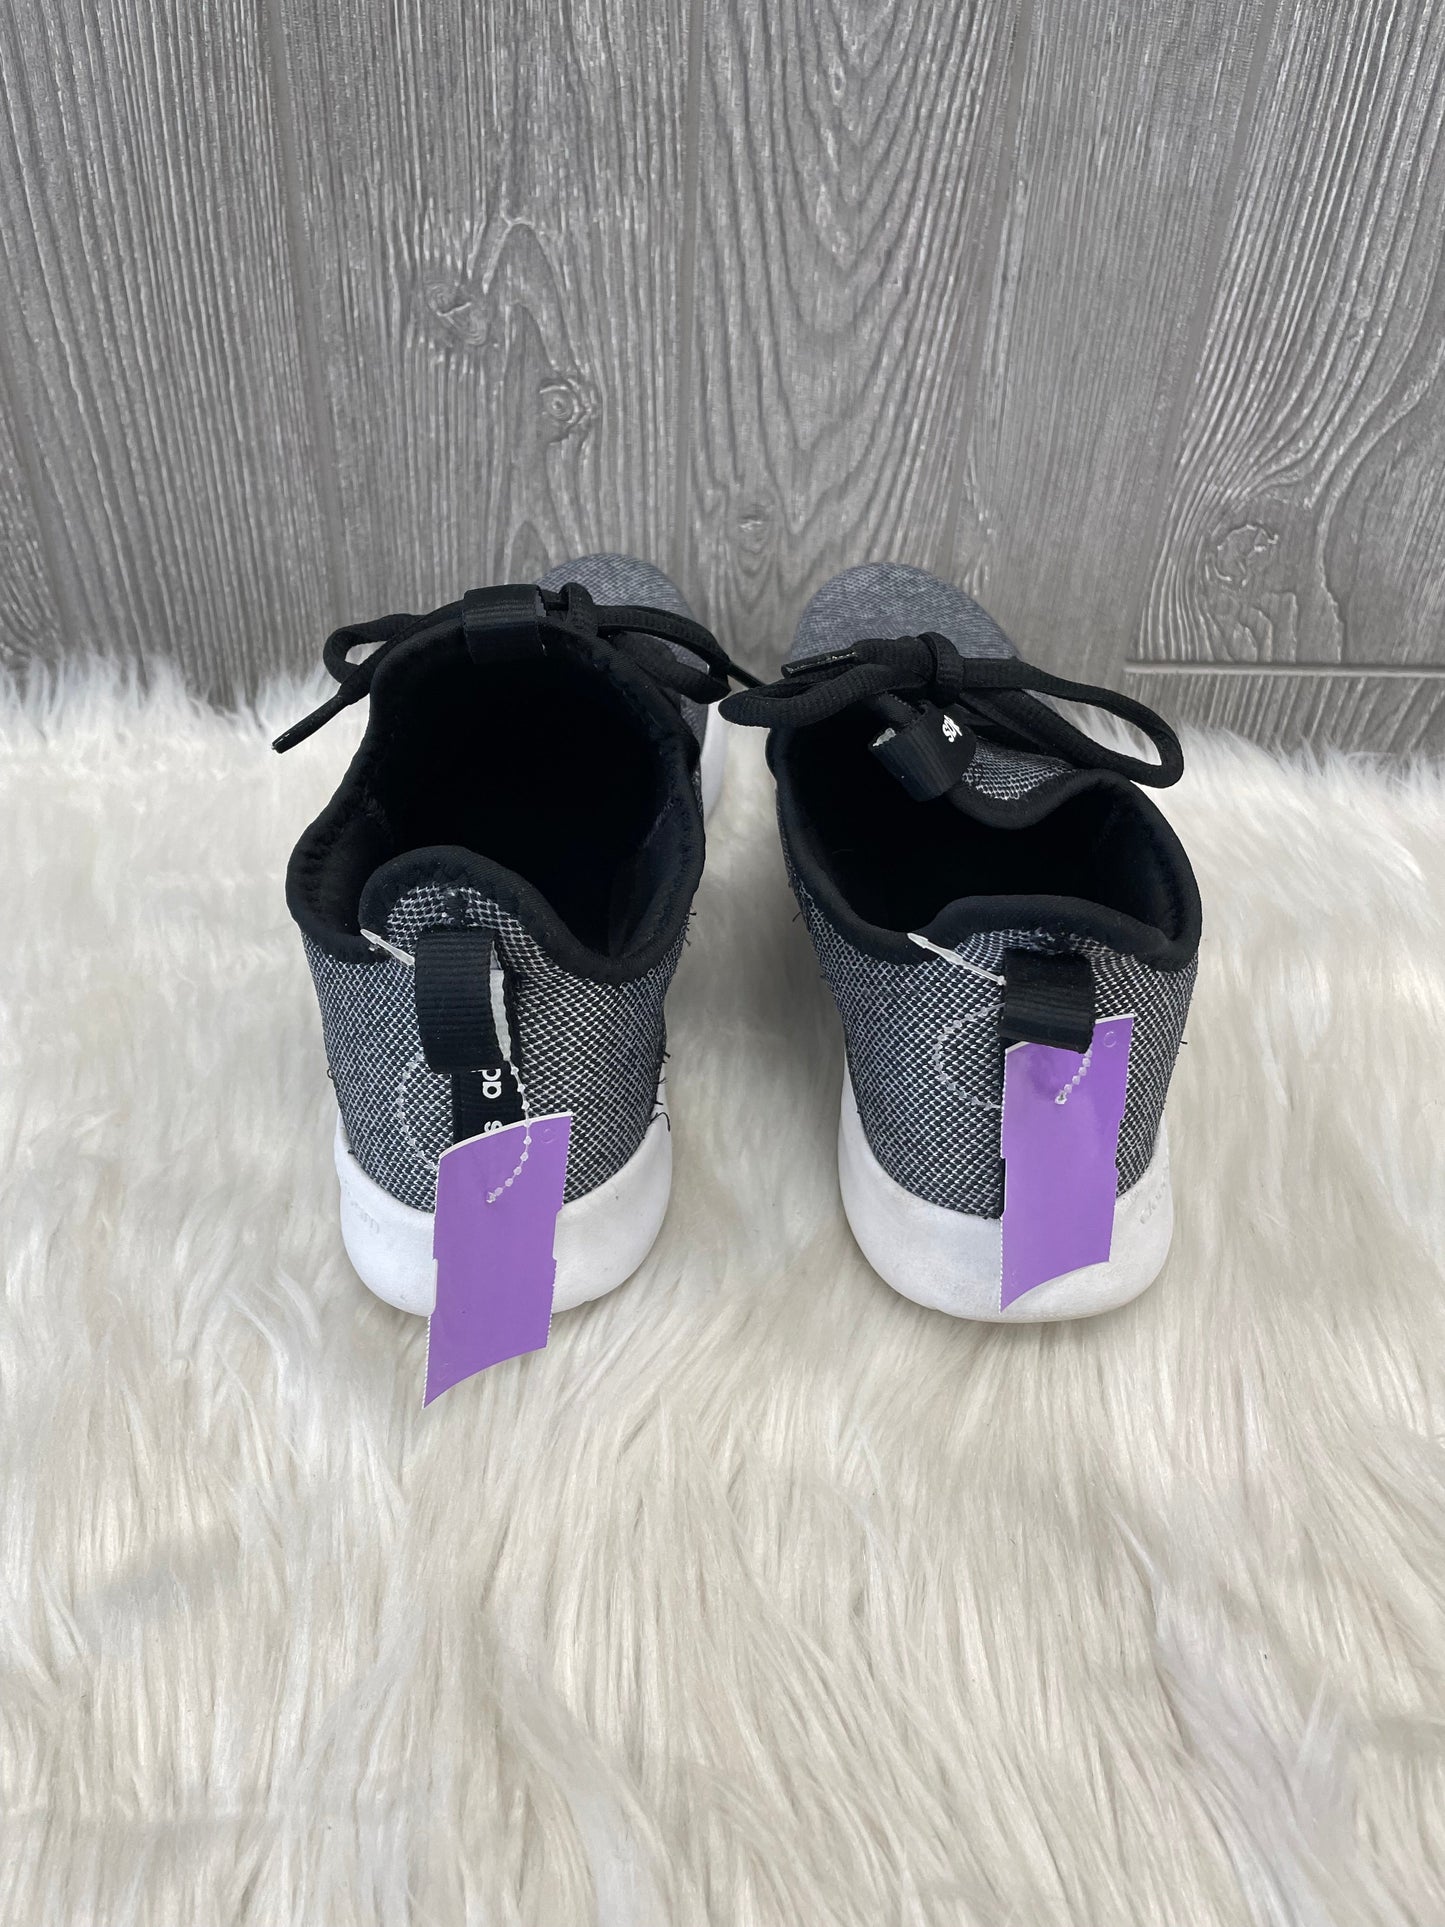 Grey Shoes Athletic Adidas, Size 11